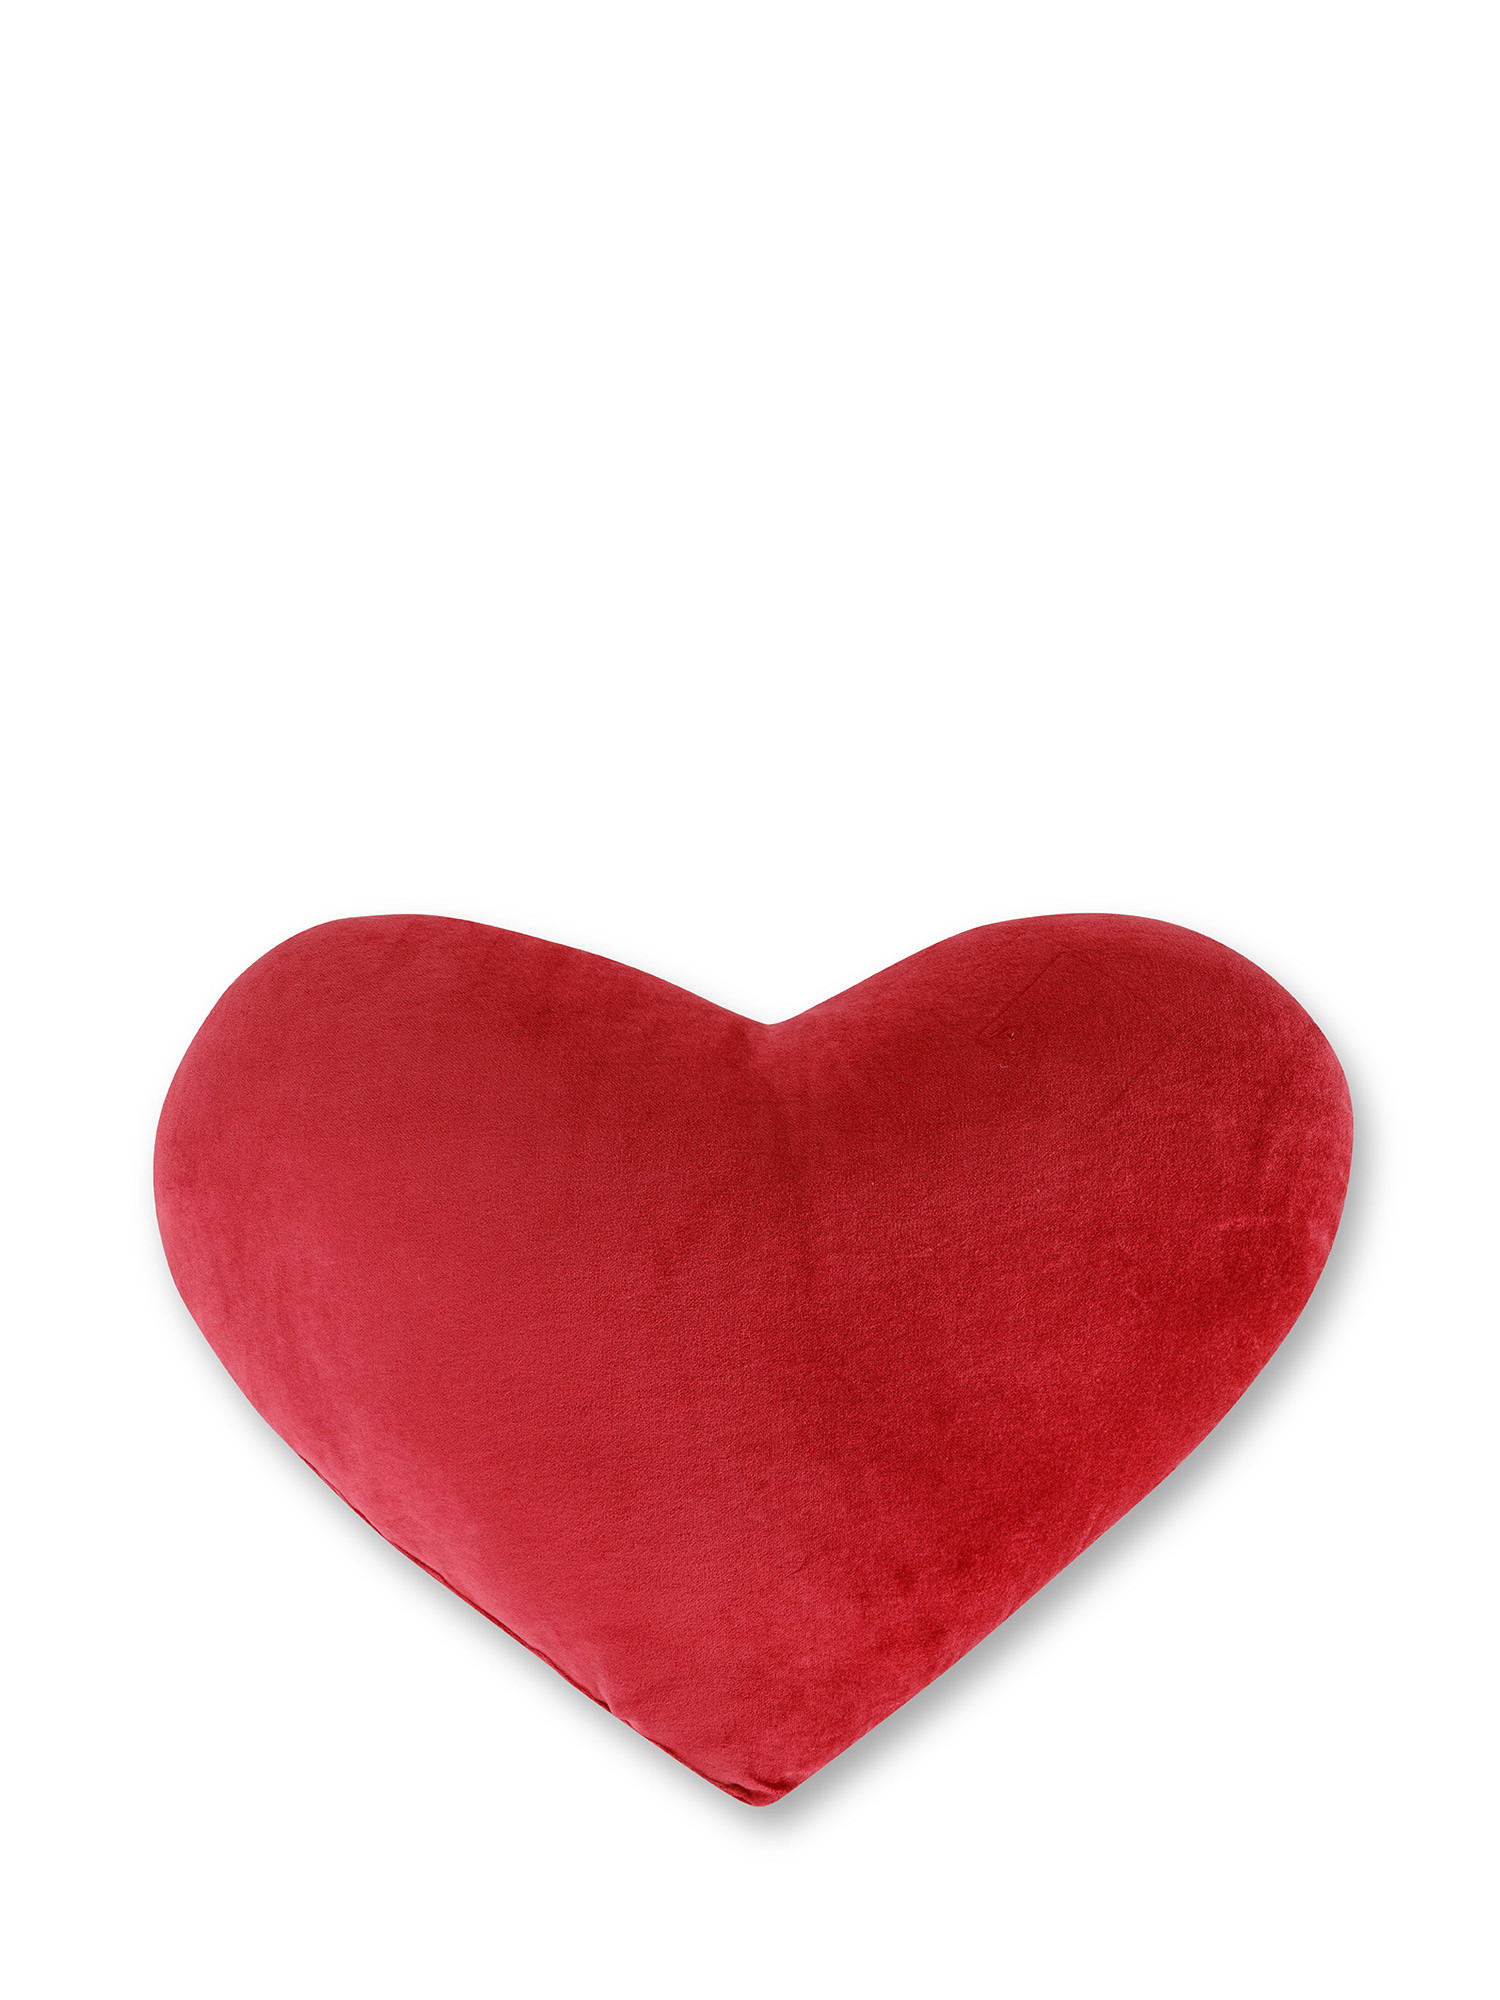 Velvet heart cushion, Red, large image number 0